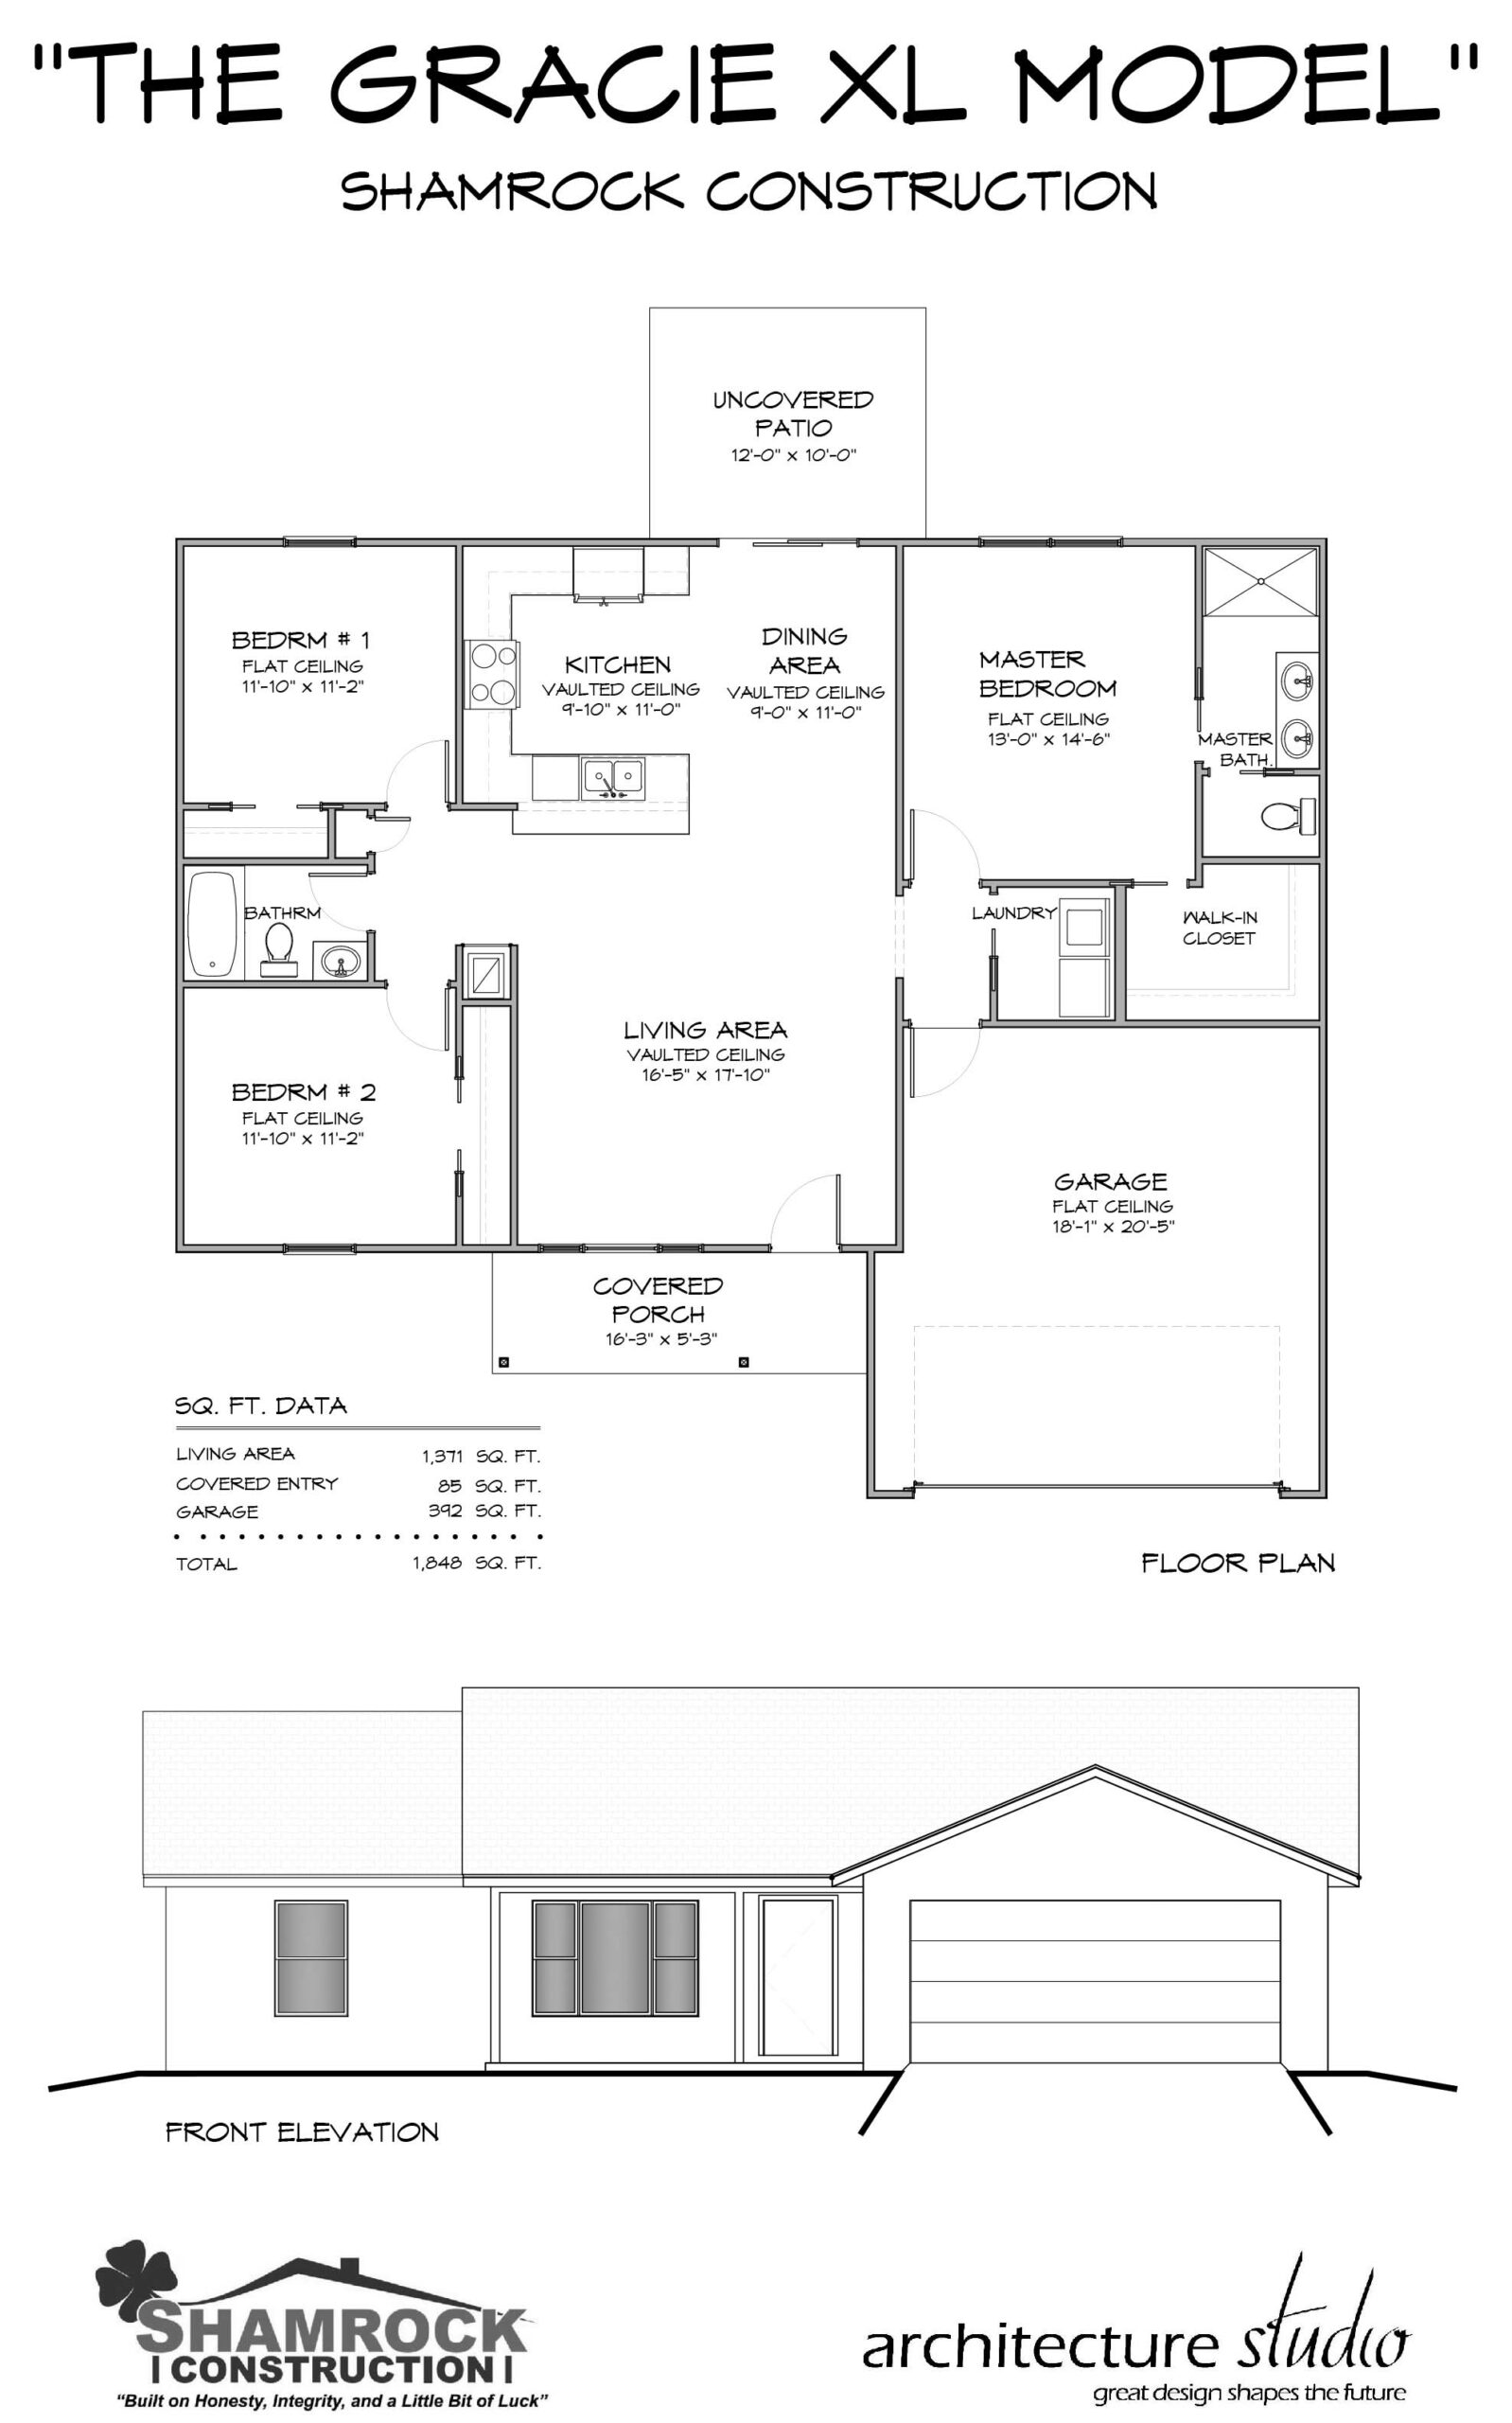 Gracie XL Model Home - Shamrock Construction